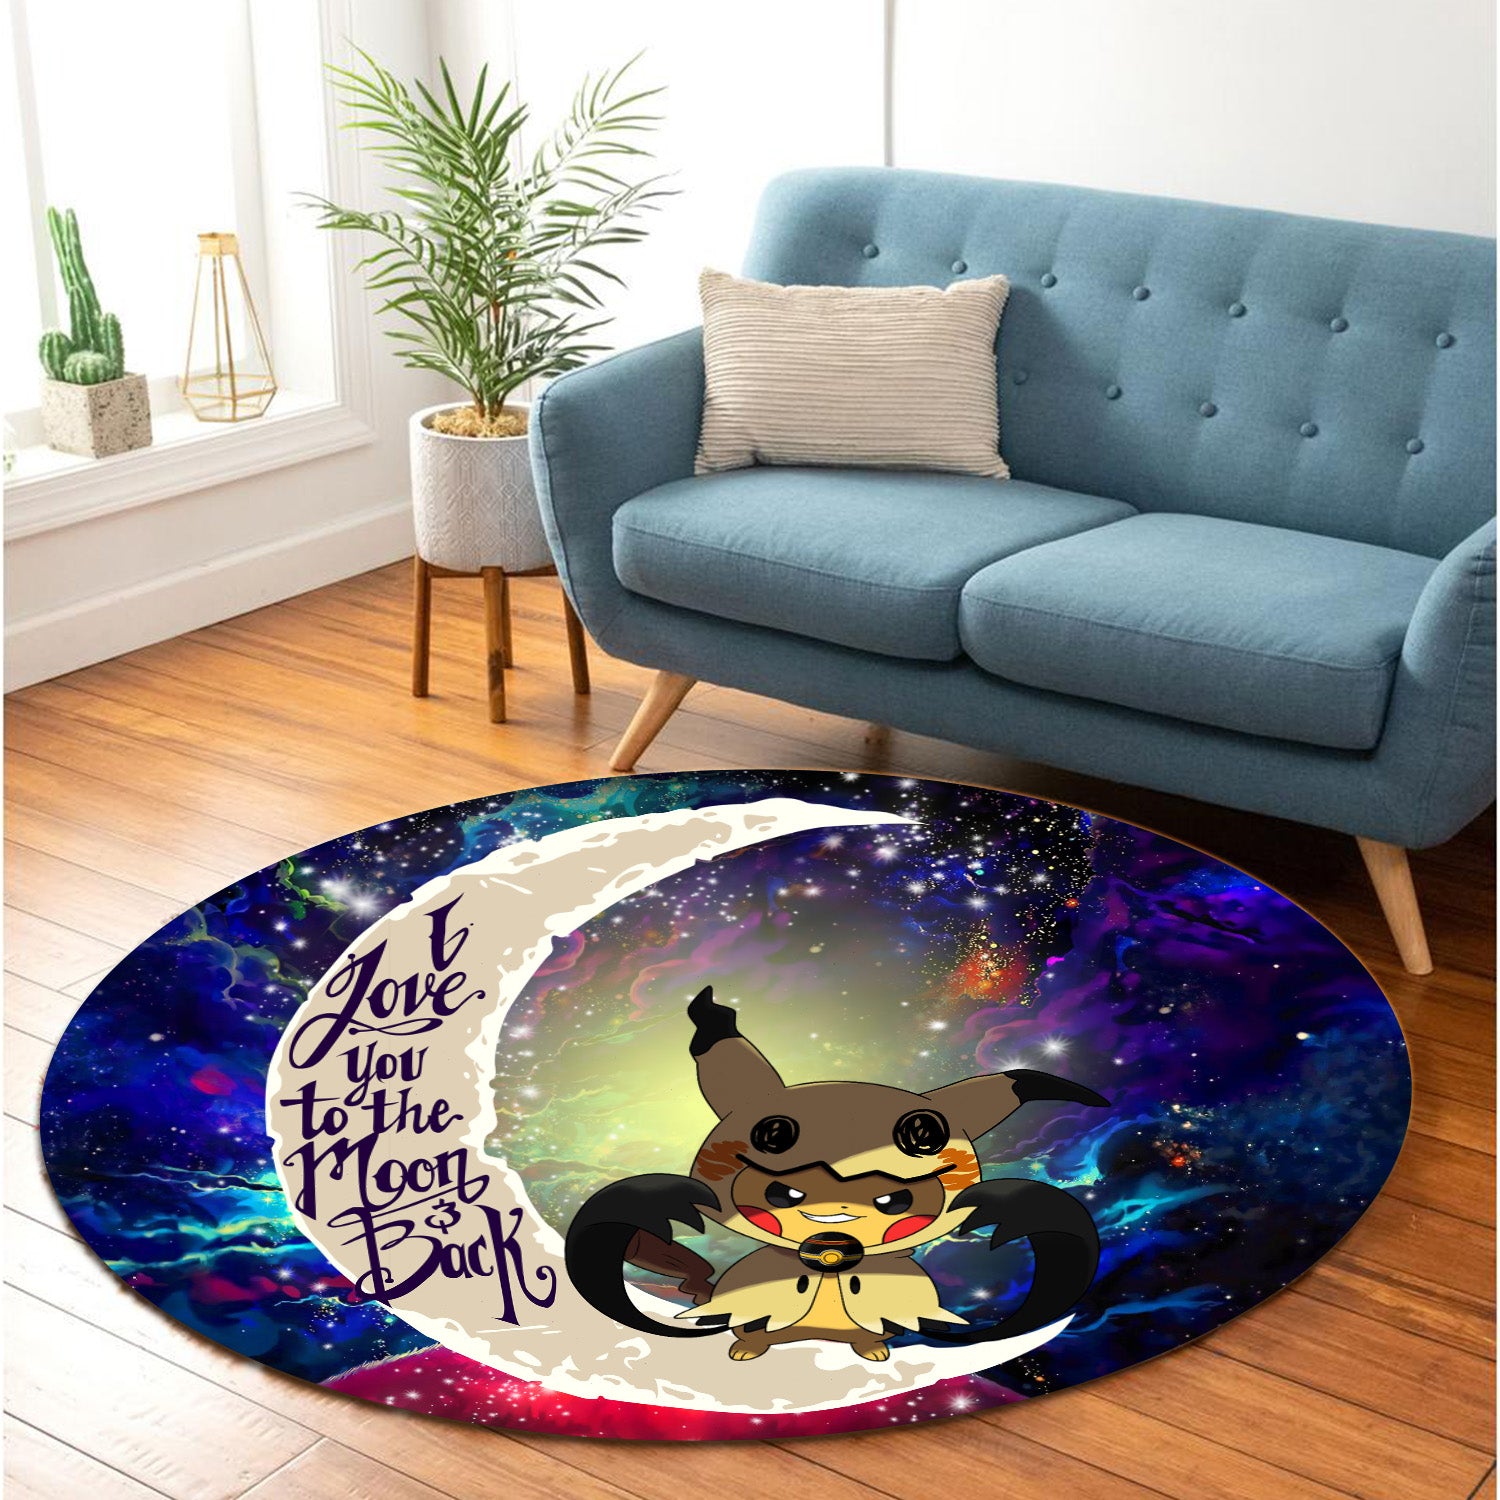 Pikachu Horro Love You To The Moon Galaxy 2 Round Carpet Rug Bedroom Livingroom Home Decor Nearkii